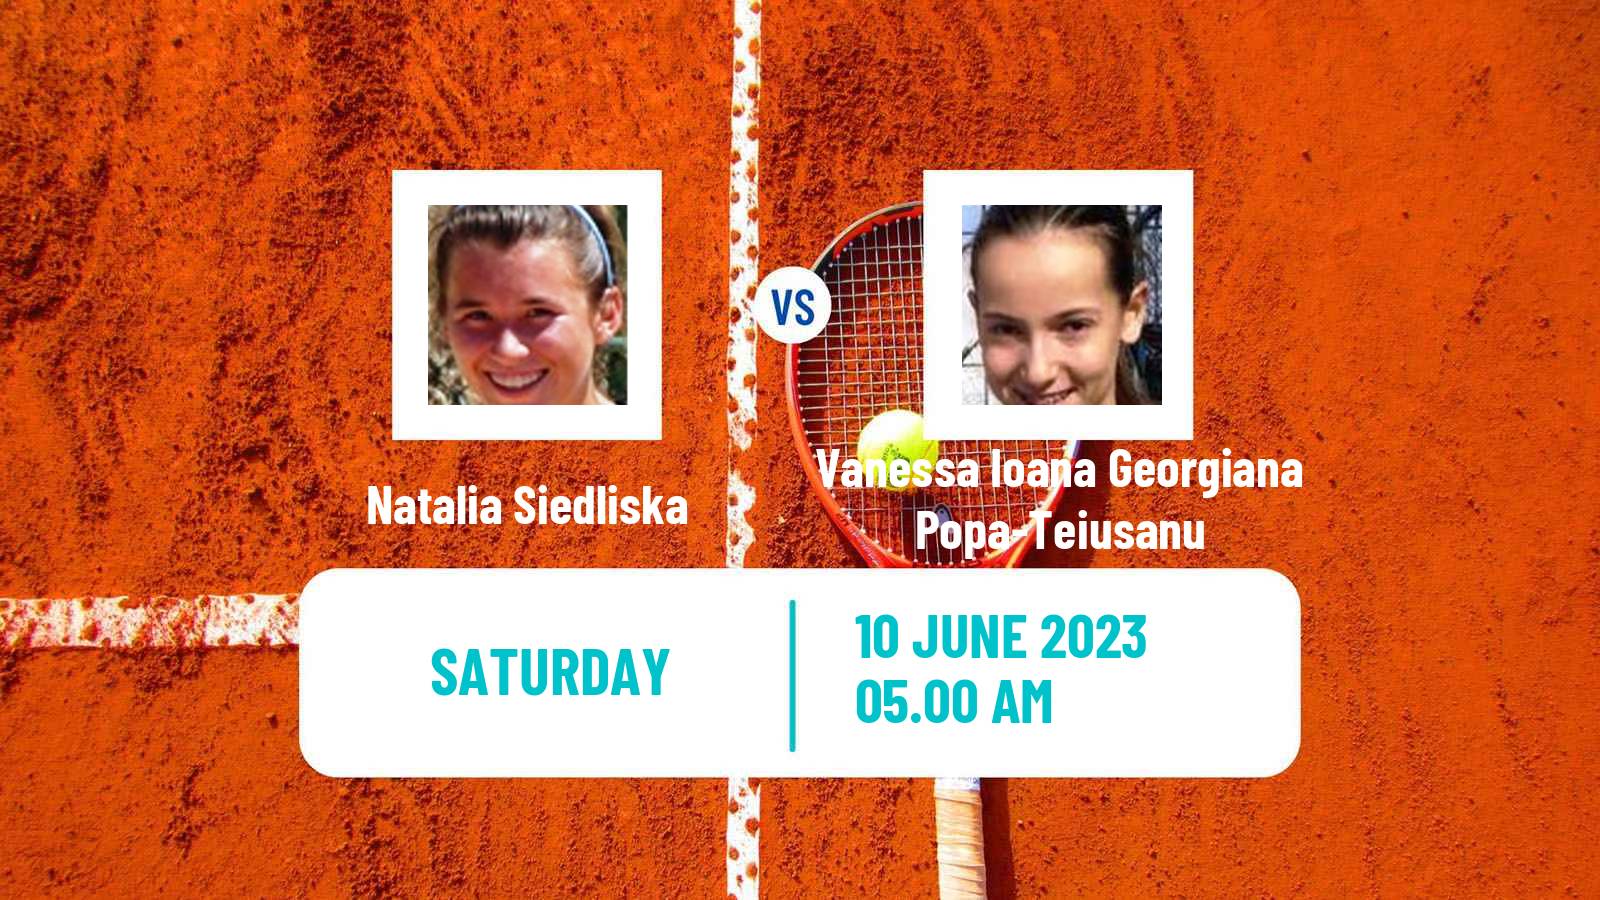 Tennis ITF W15 Monastir 18 Women Natalia Siedliska - Vanessa Ioana Georgiana Popa-Teiusanu